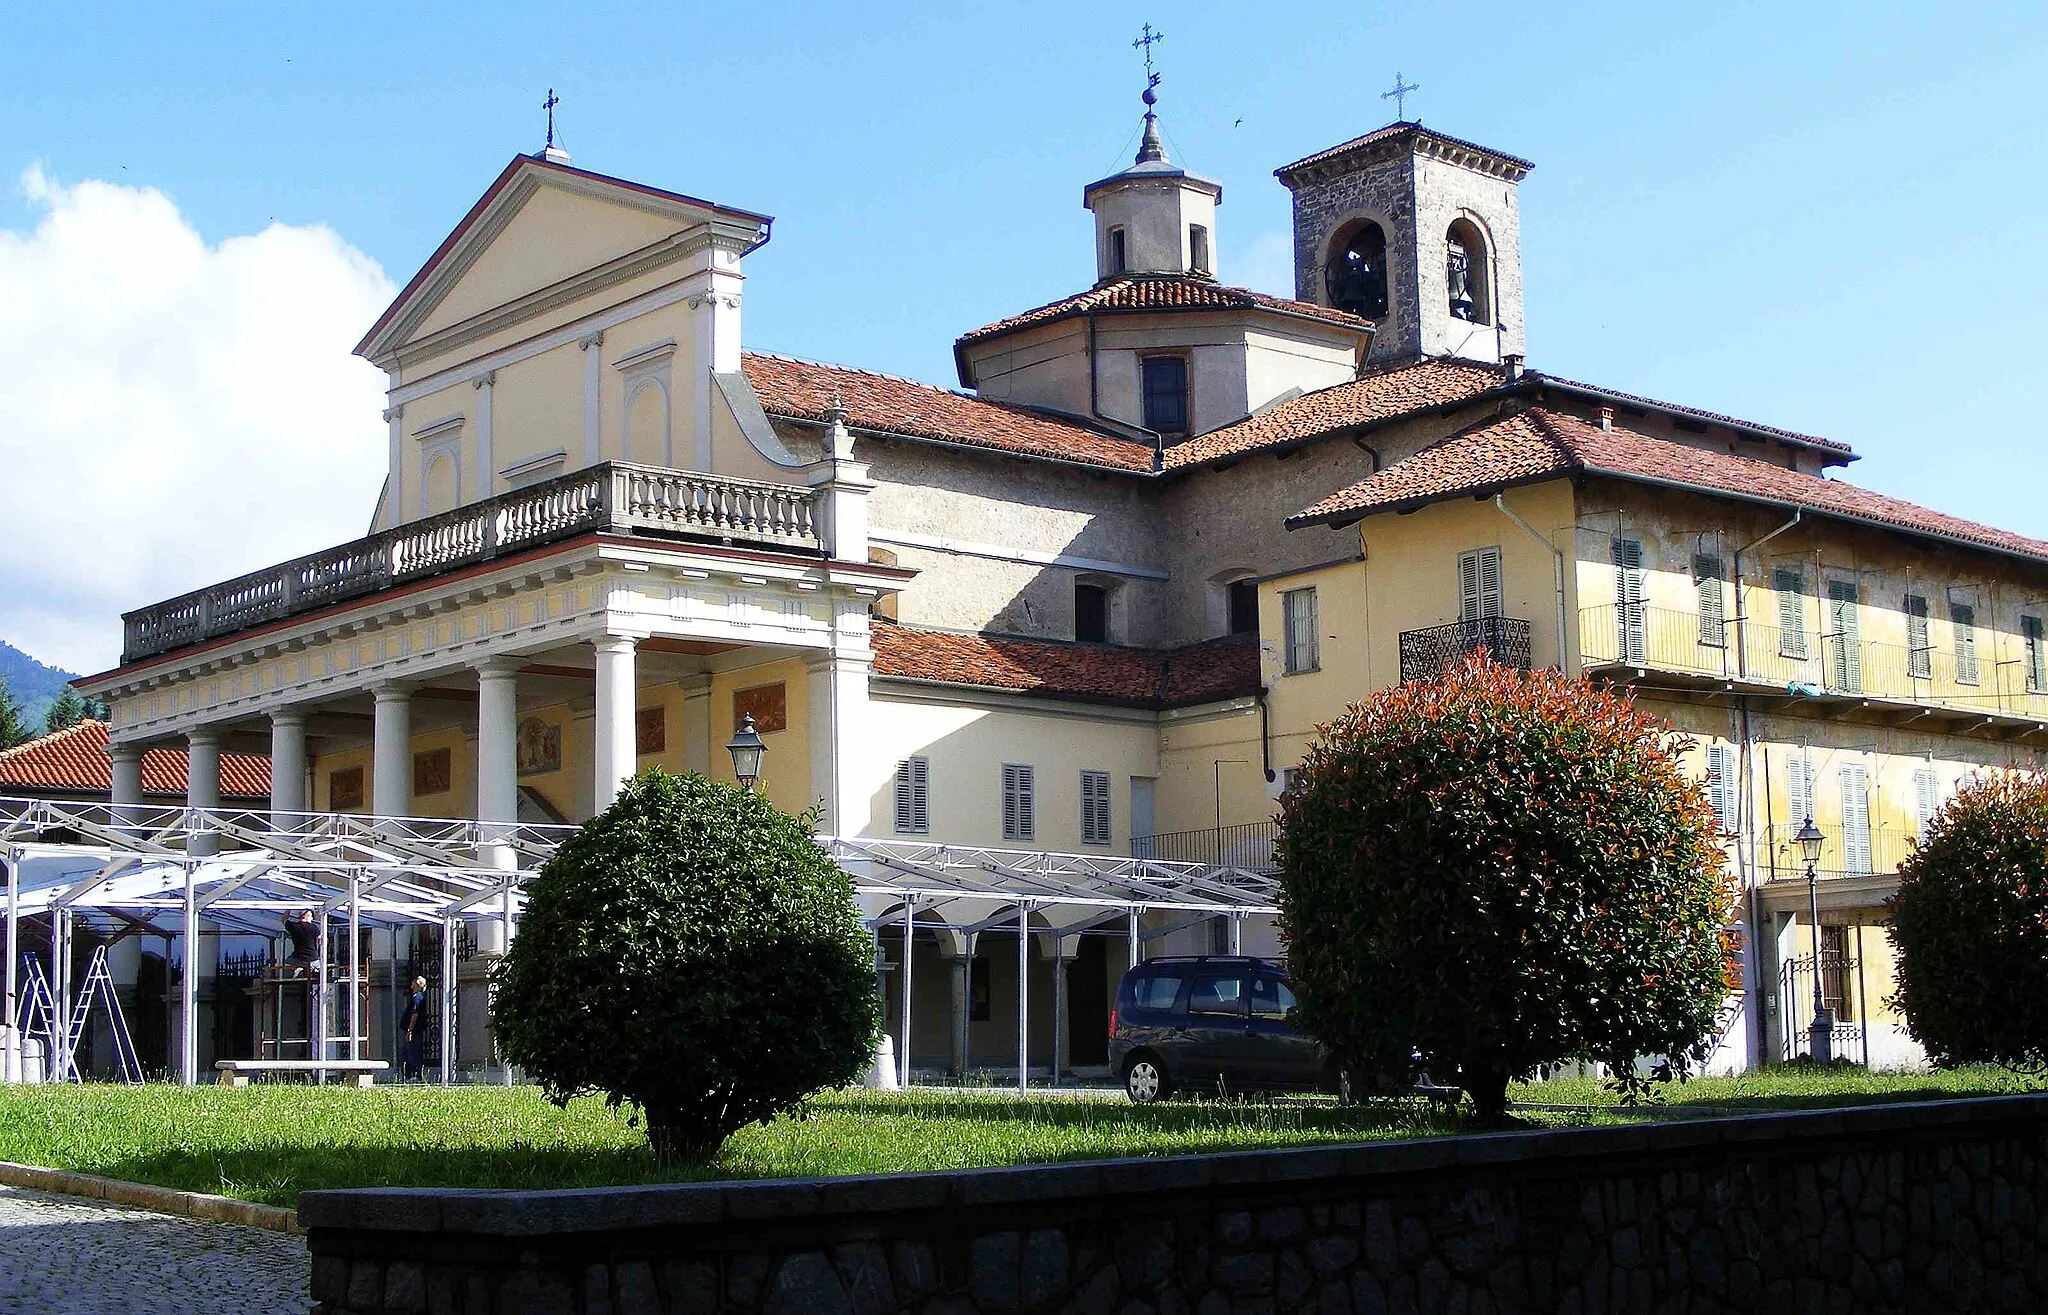 Image of Piemonte